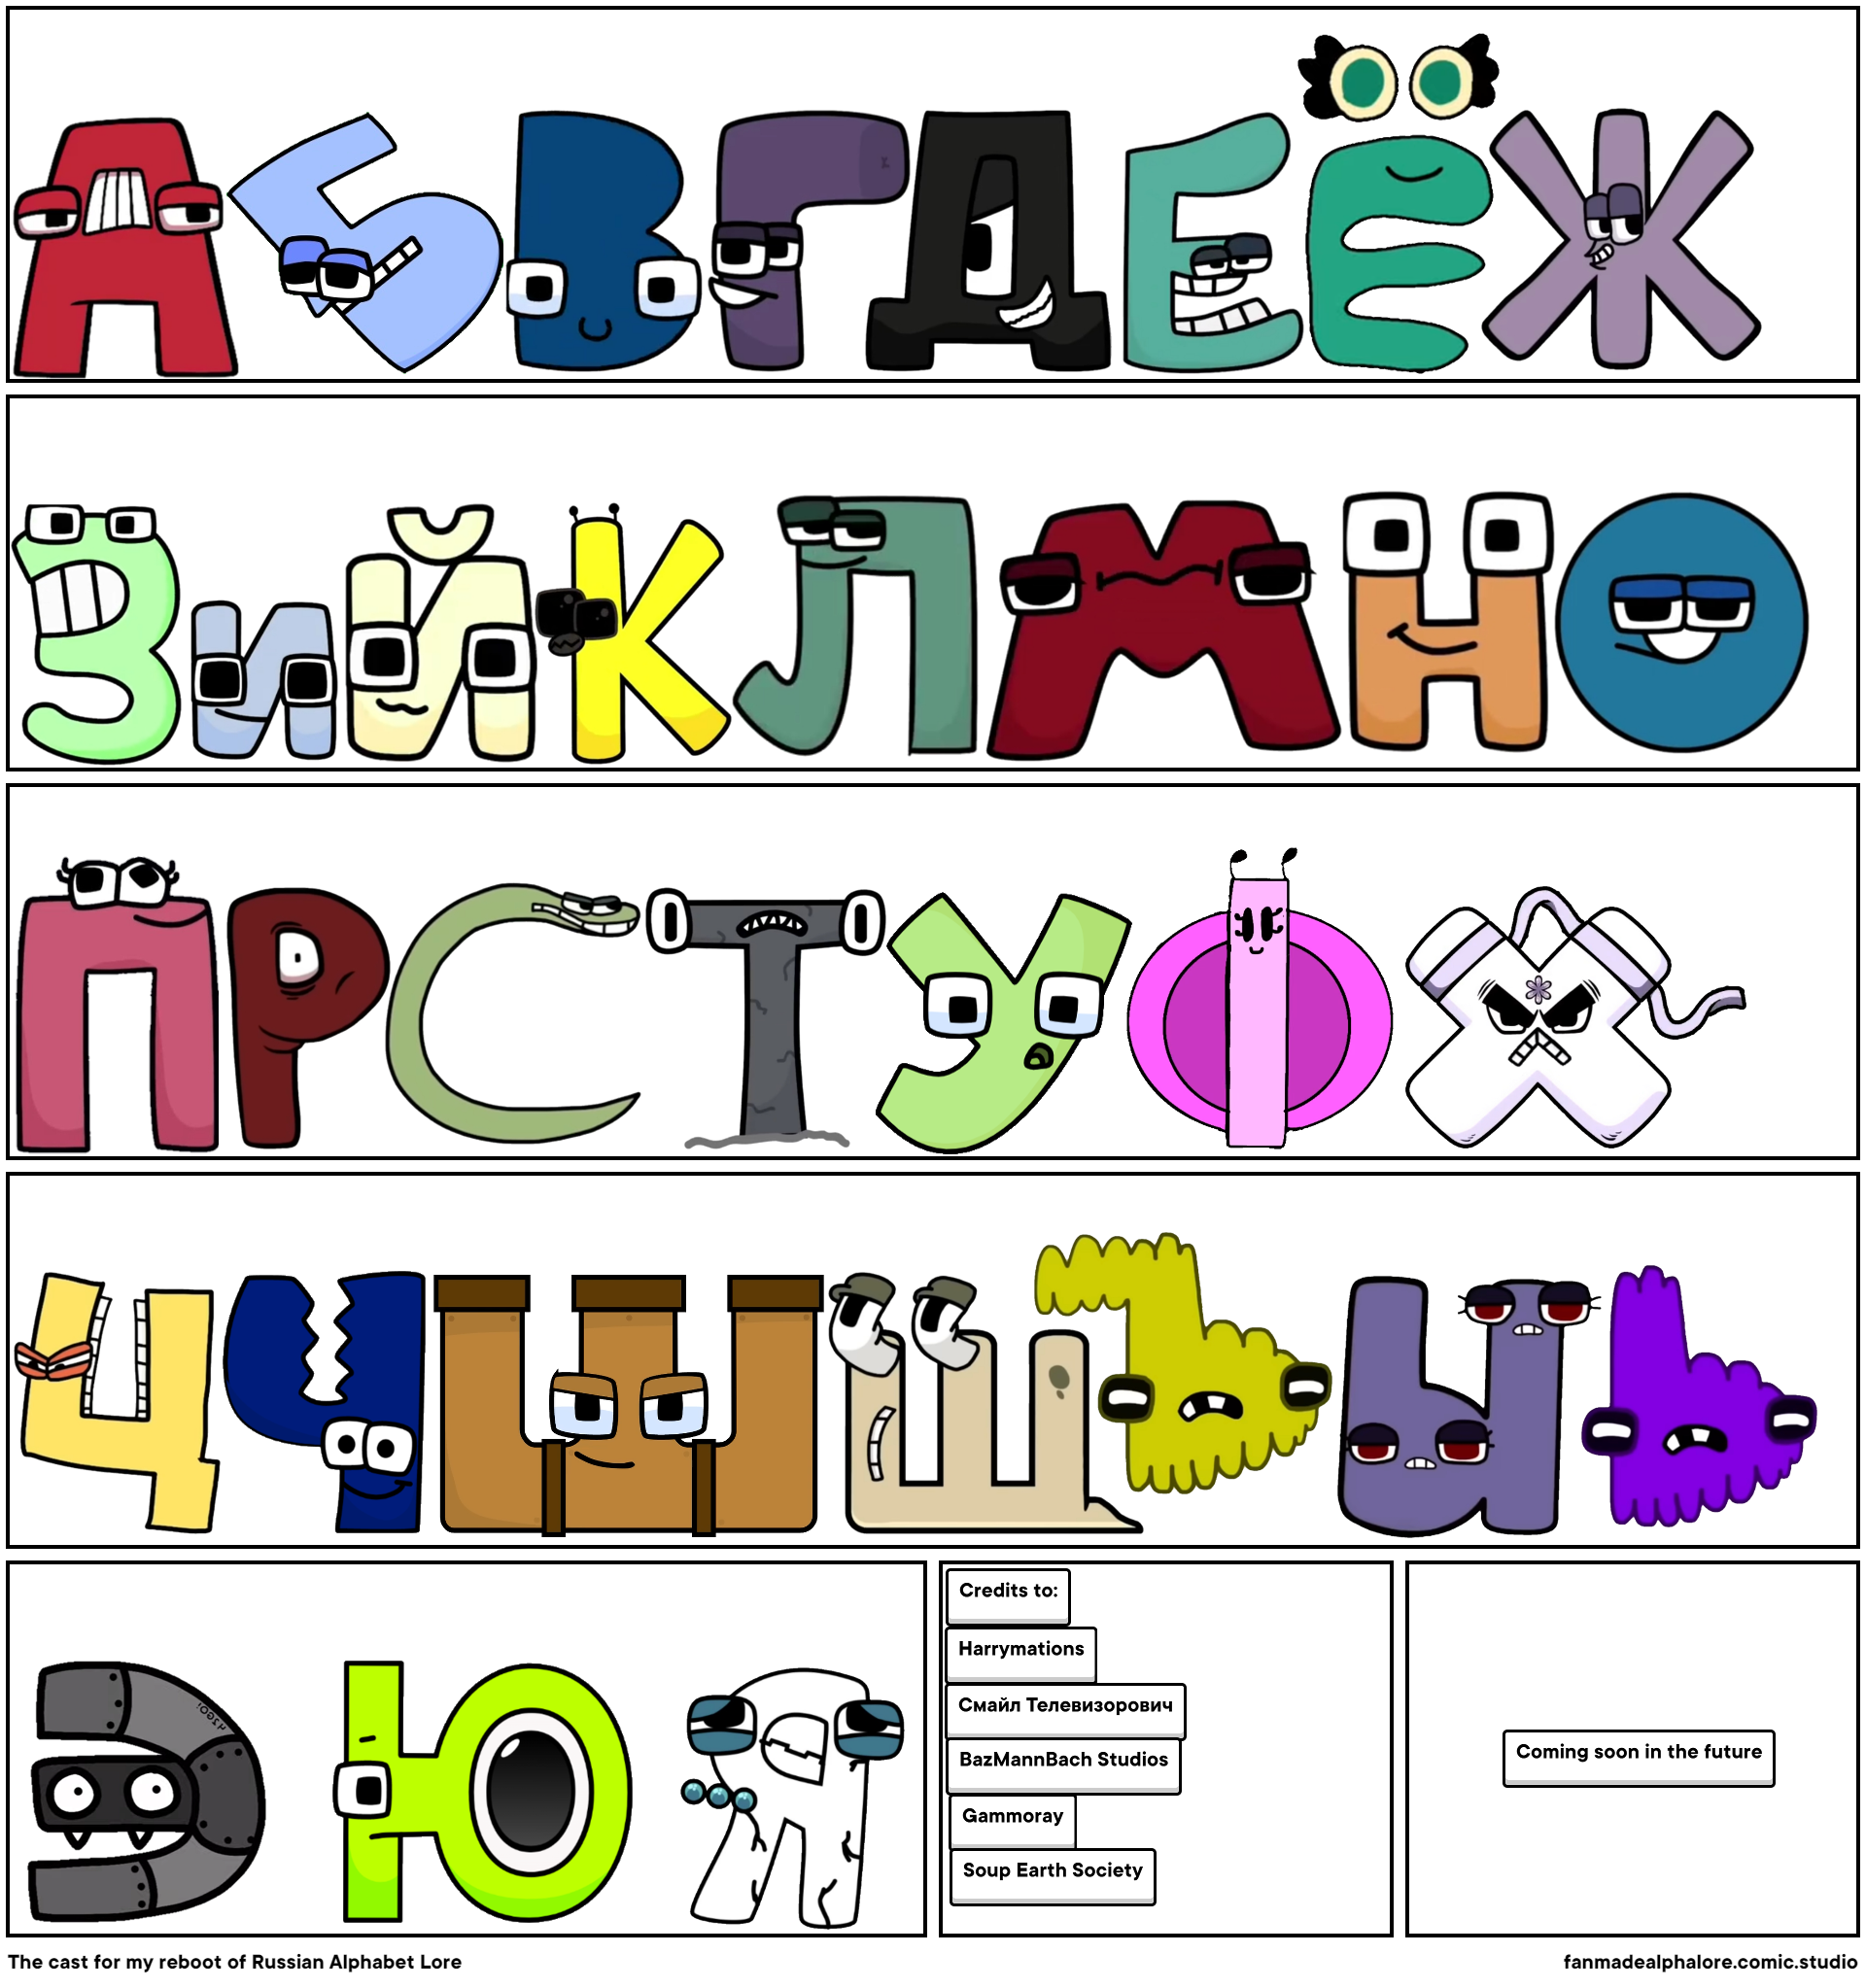 harrymations russian alphabet lore comic studio｜TikTokで検索